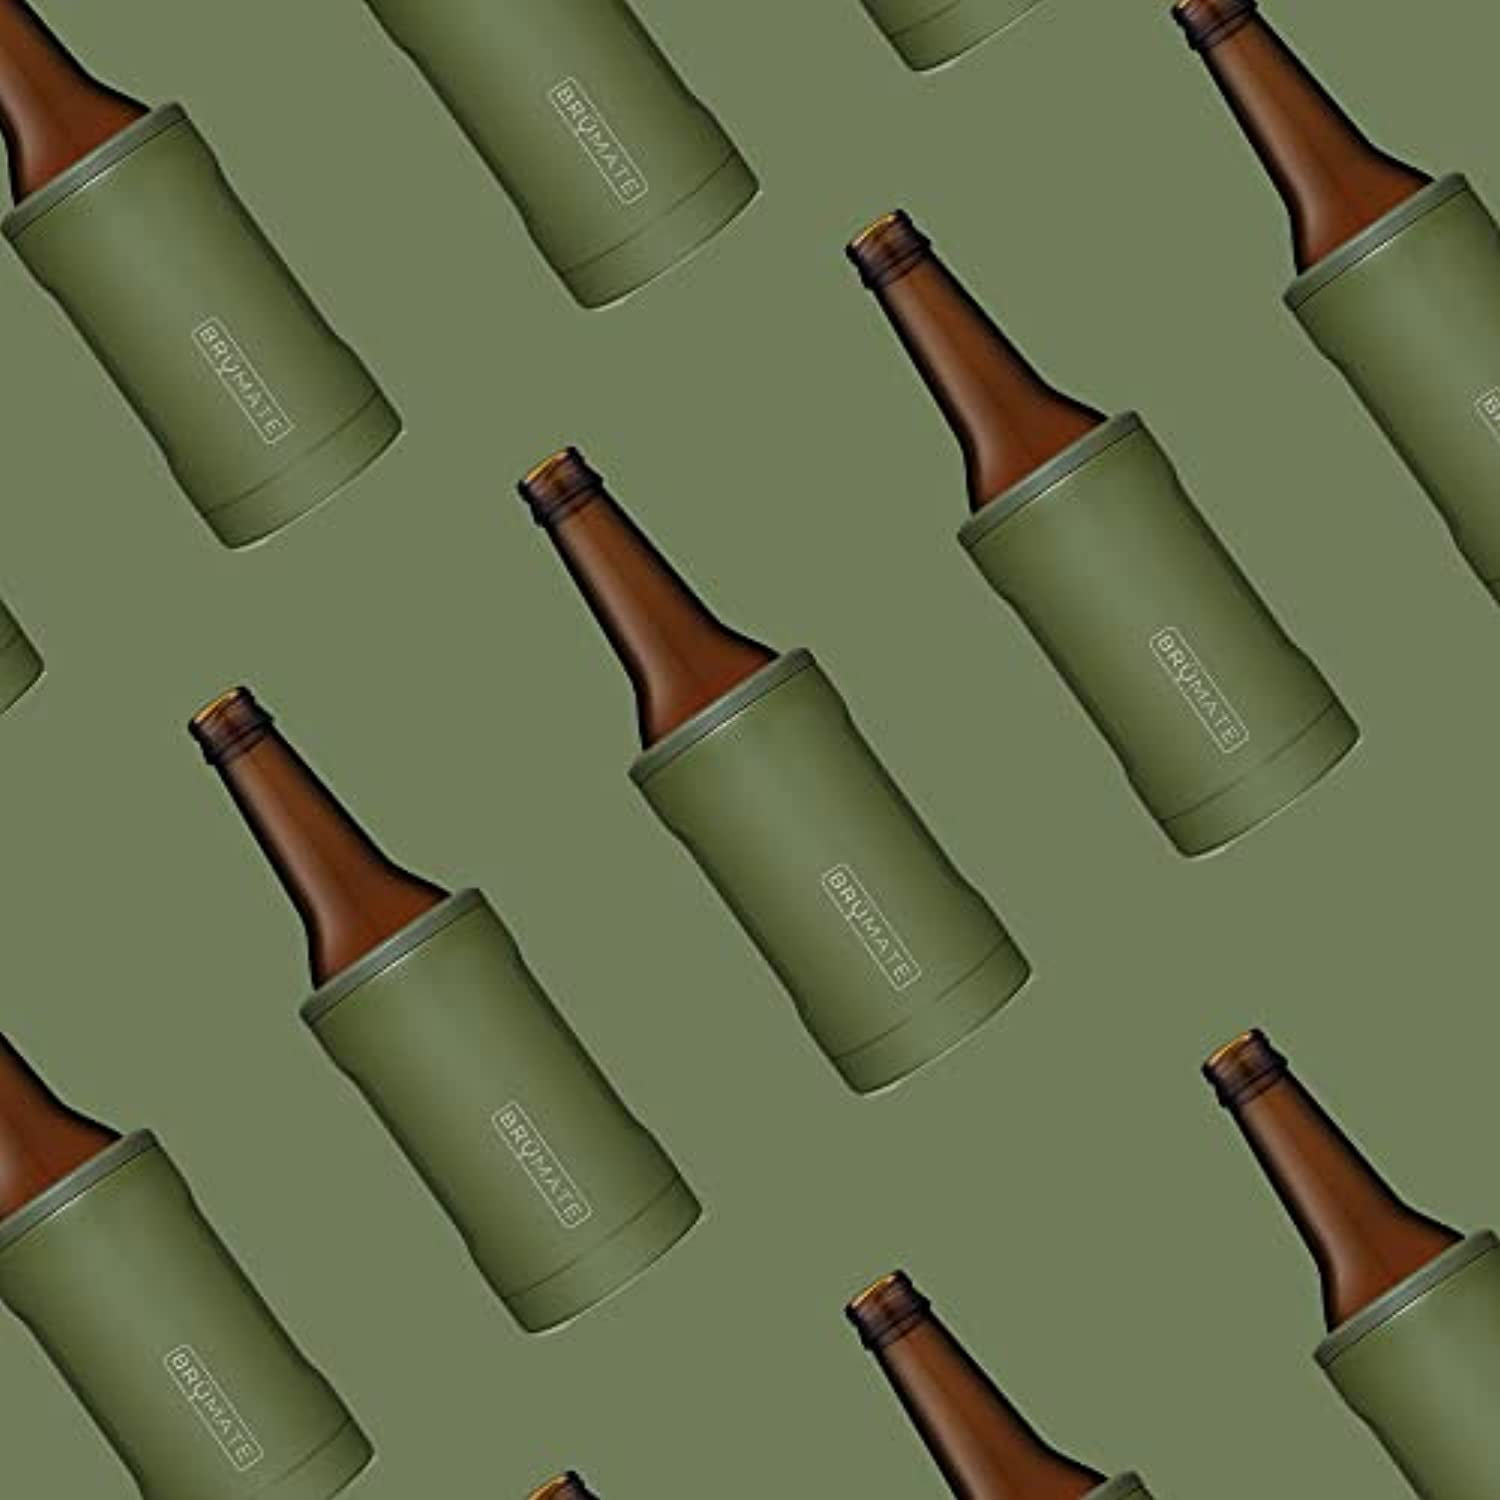 BrüMate Hopsulator Bott'l | Insulated Bottle Cooler | Matte Navy | 12oz Bottles